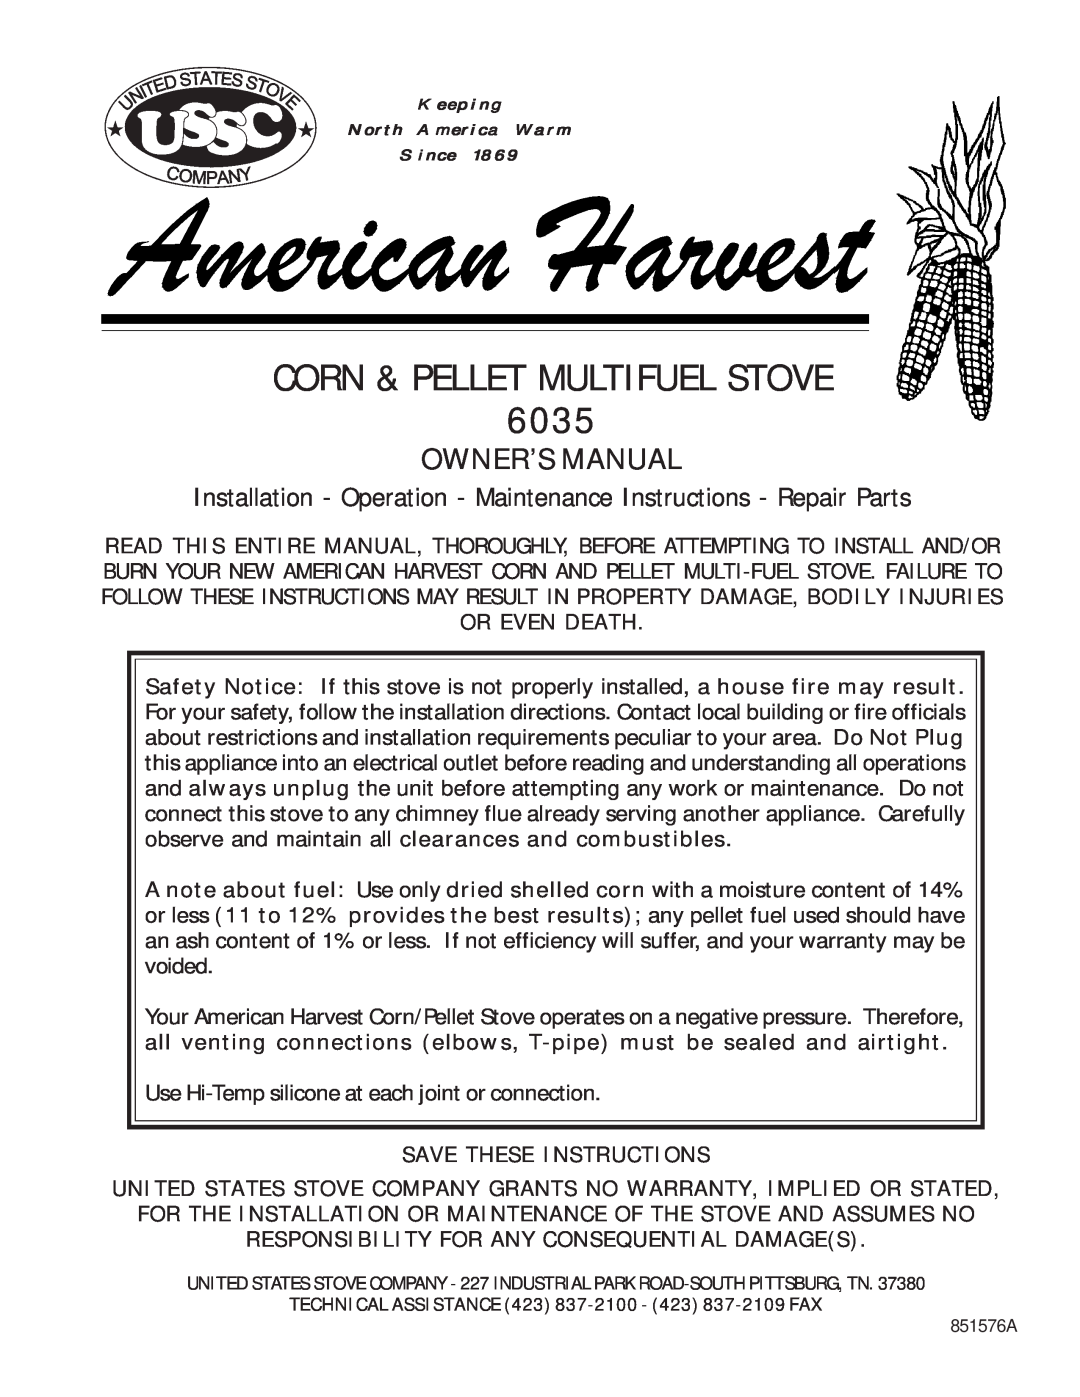 United States Stove 6035 owner manual Corn & Pellet Multifuel Stove, K e e p i n g North America Warm Since 